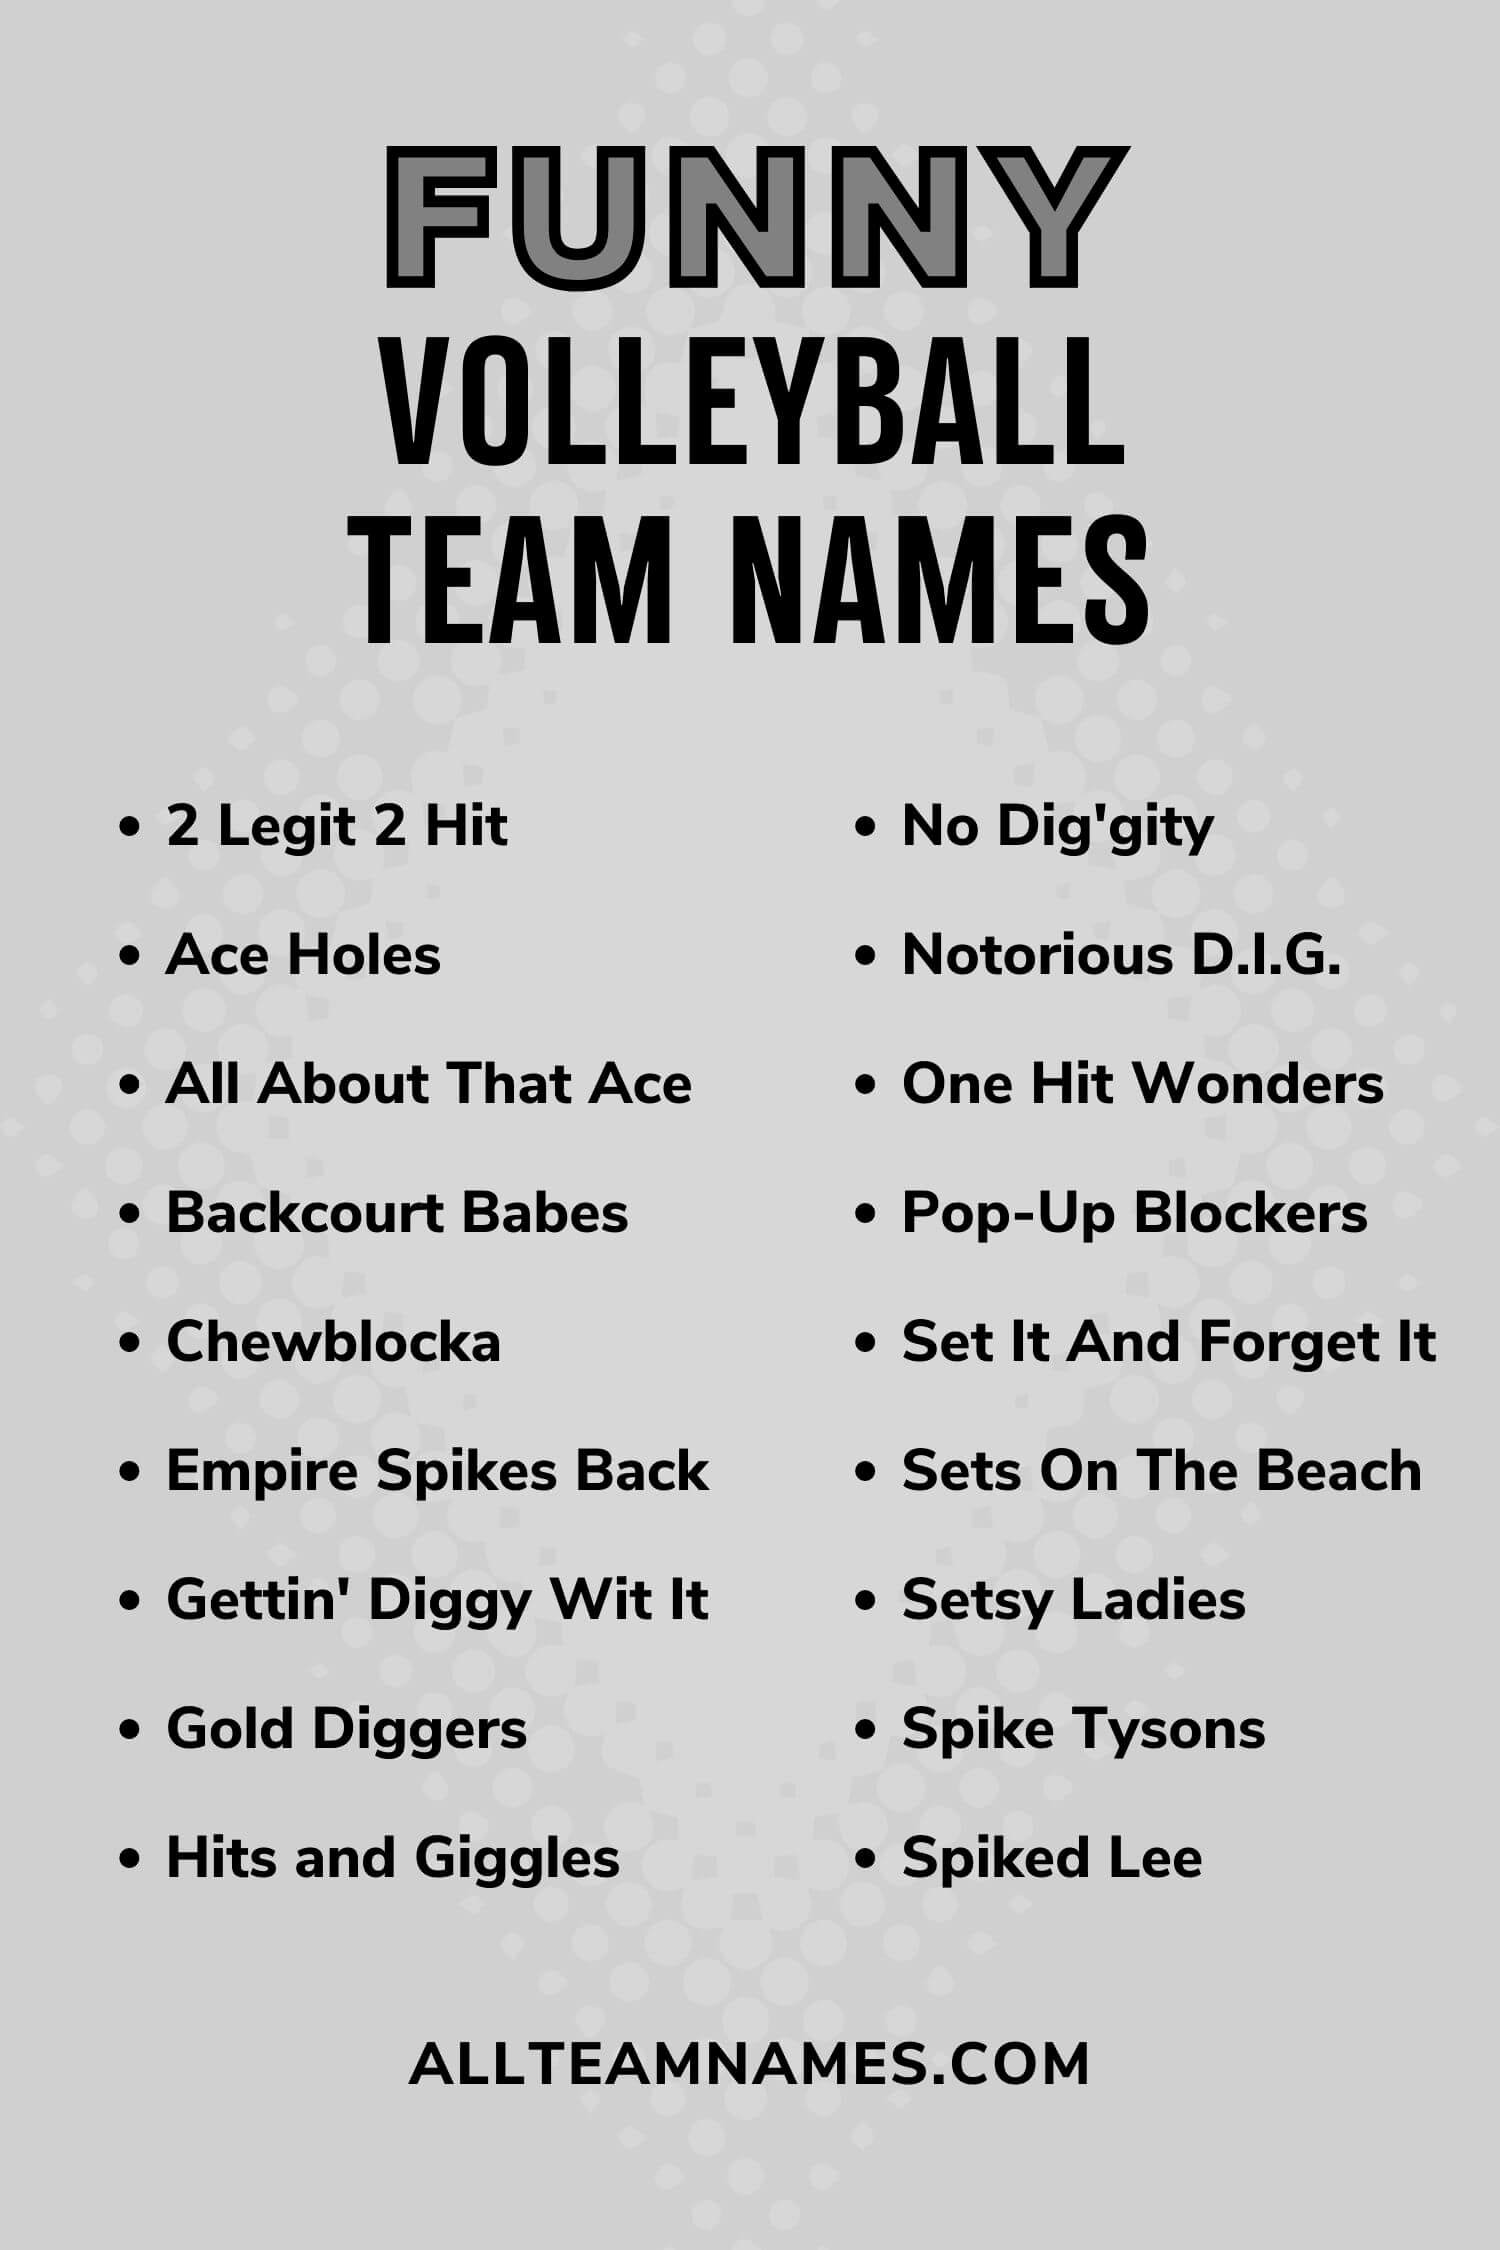 Isbjørn skør Satire 111 Volleyball Team Names That Are A Hit